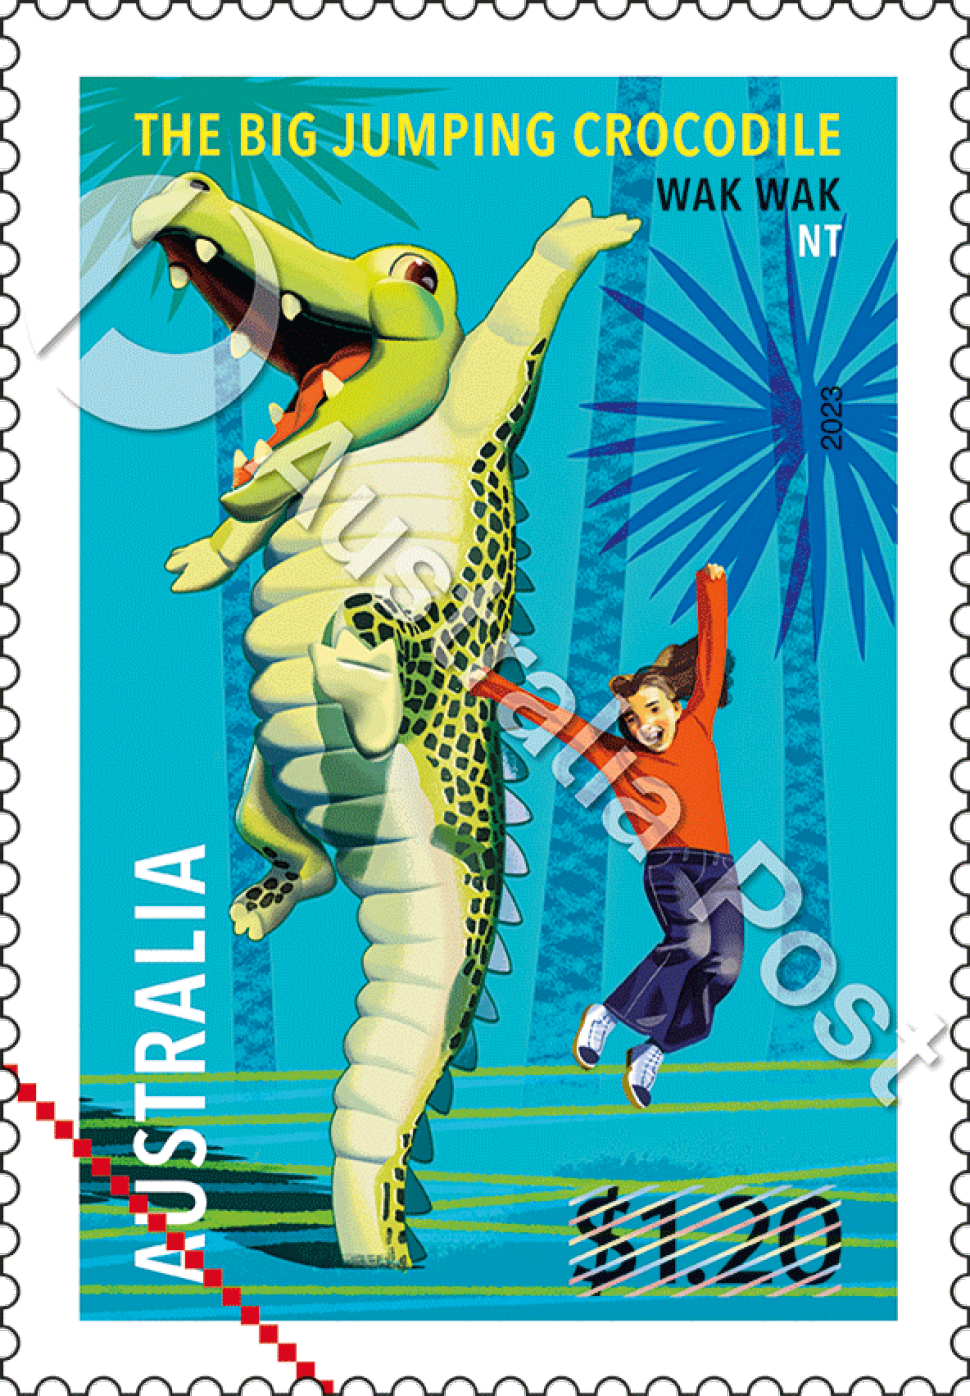 The Big Jumping Crocodile $1.20 stamp